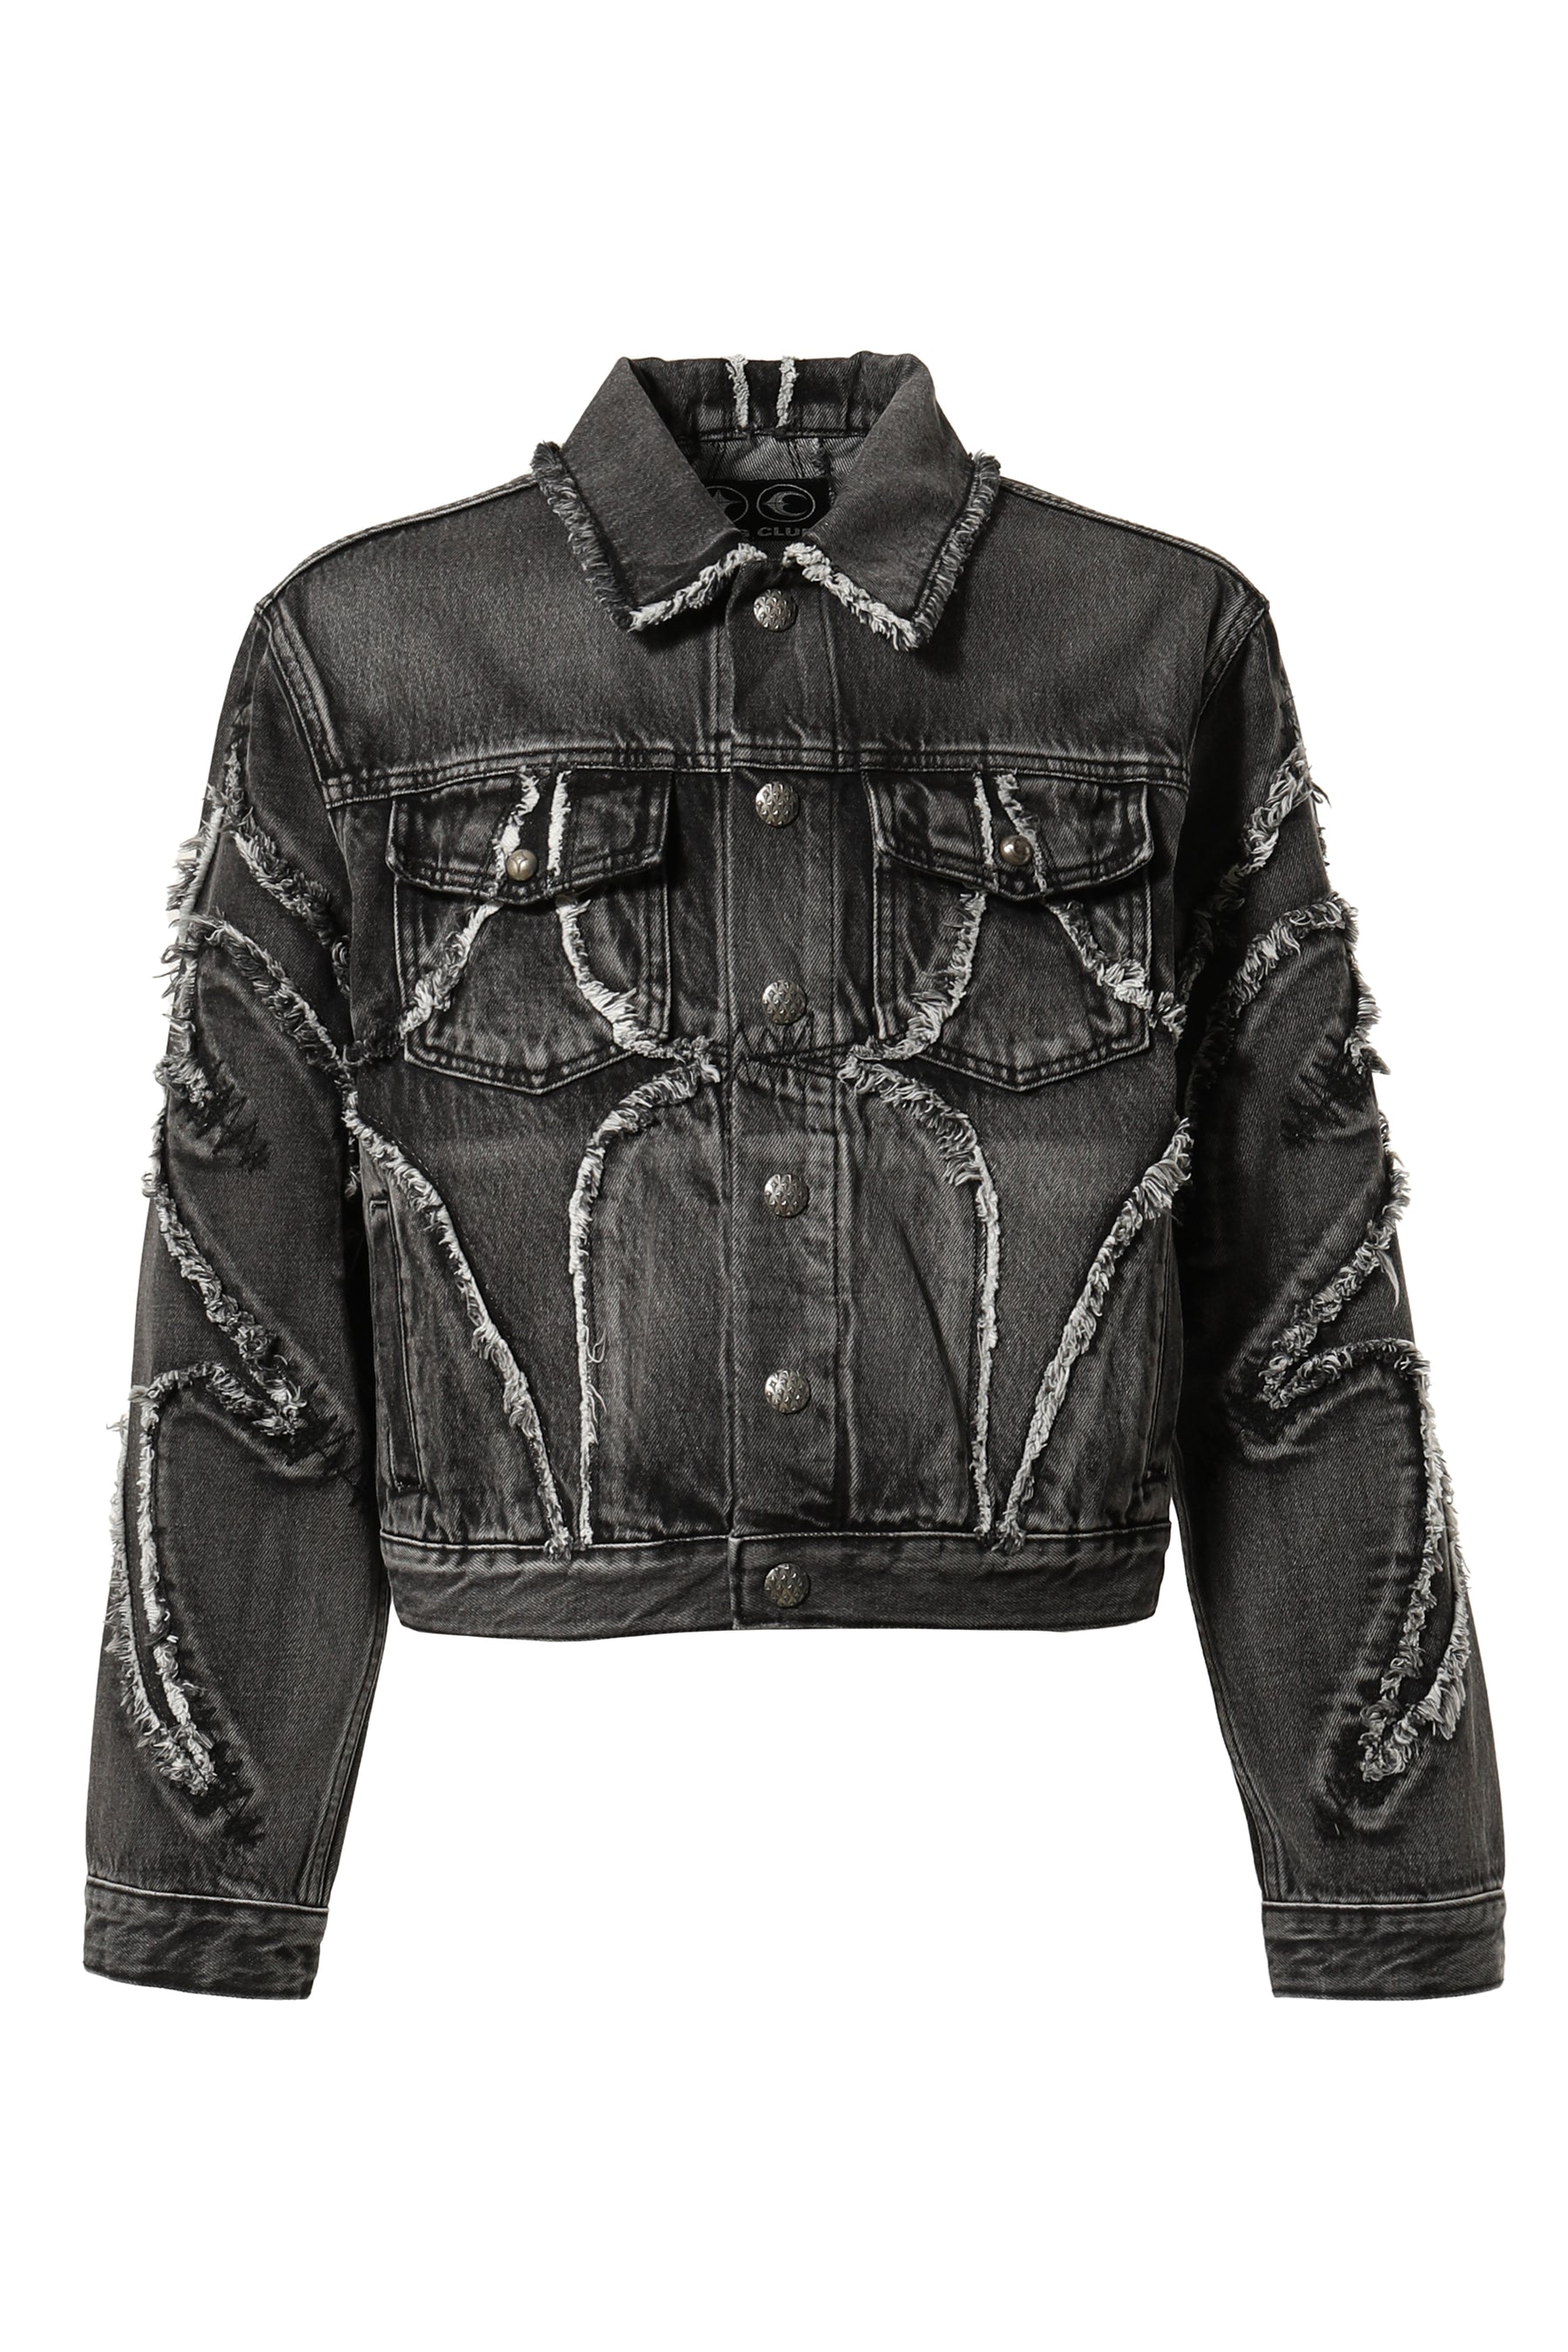 Sankuanz Studded Denim Jacket - Black | Garmentory